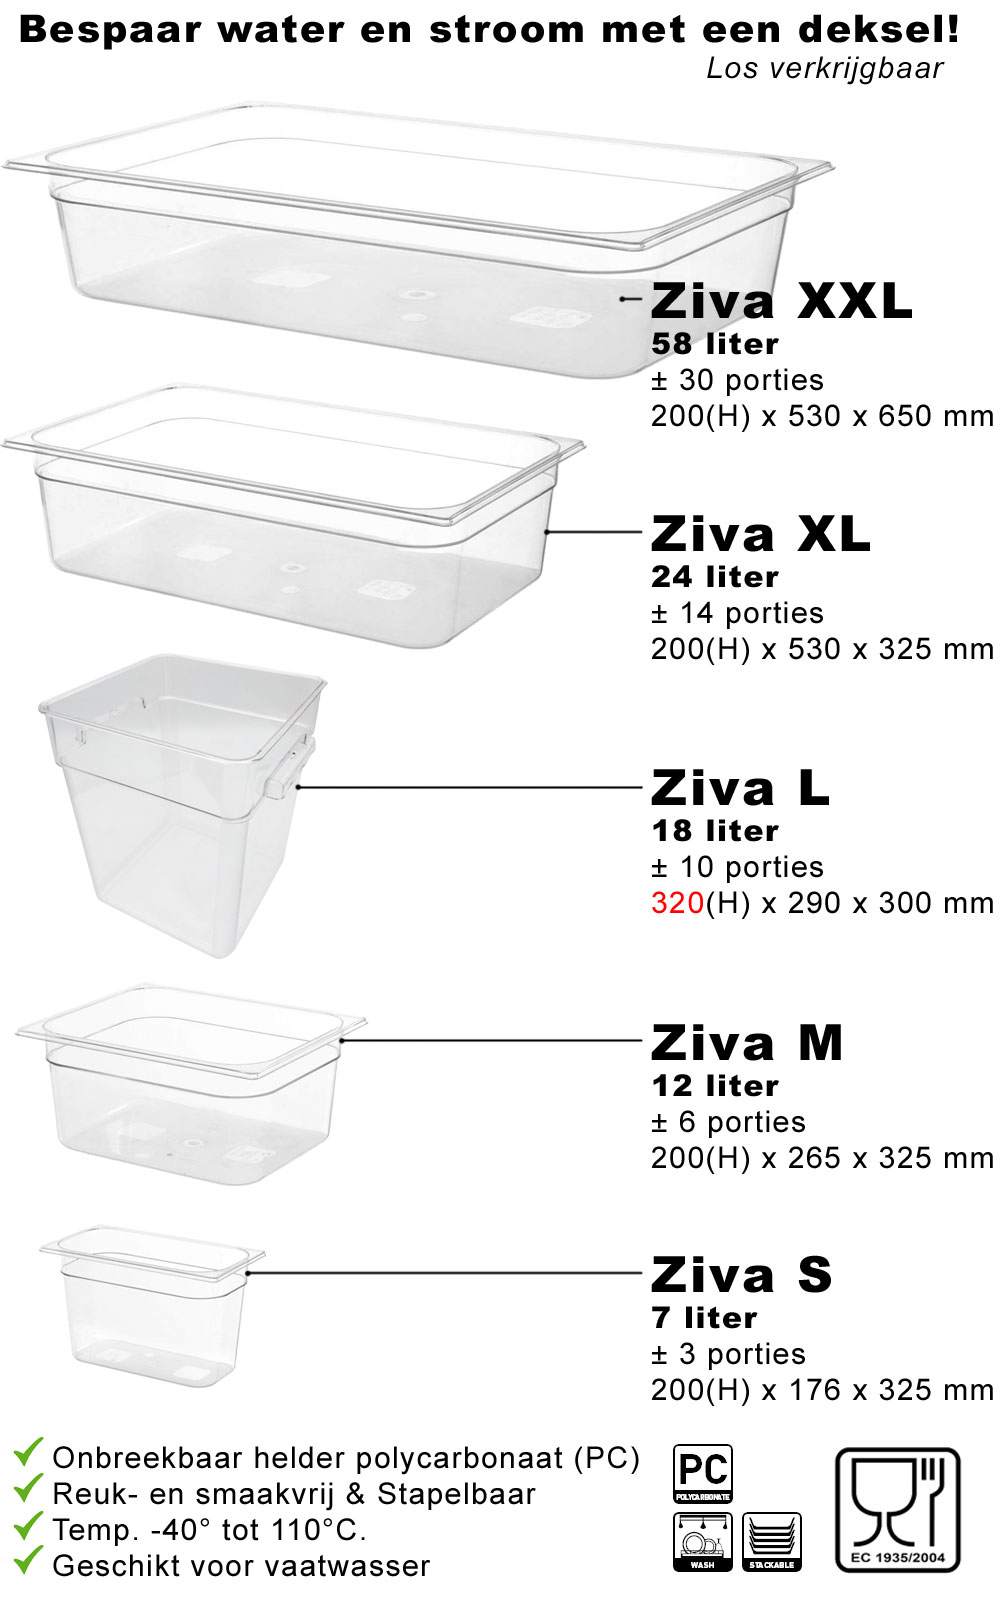 Wartmann 1507 (1300W) + Ziva OneTouch + 12 liter container package